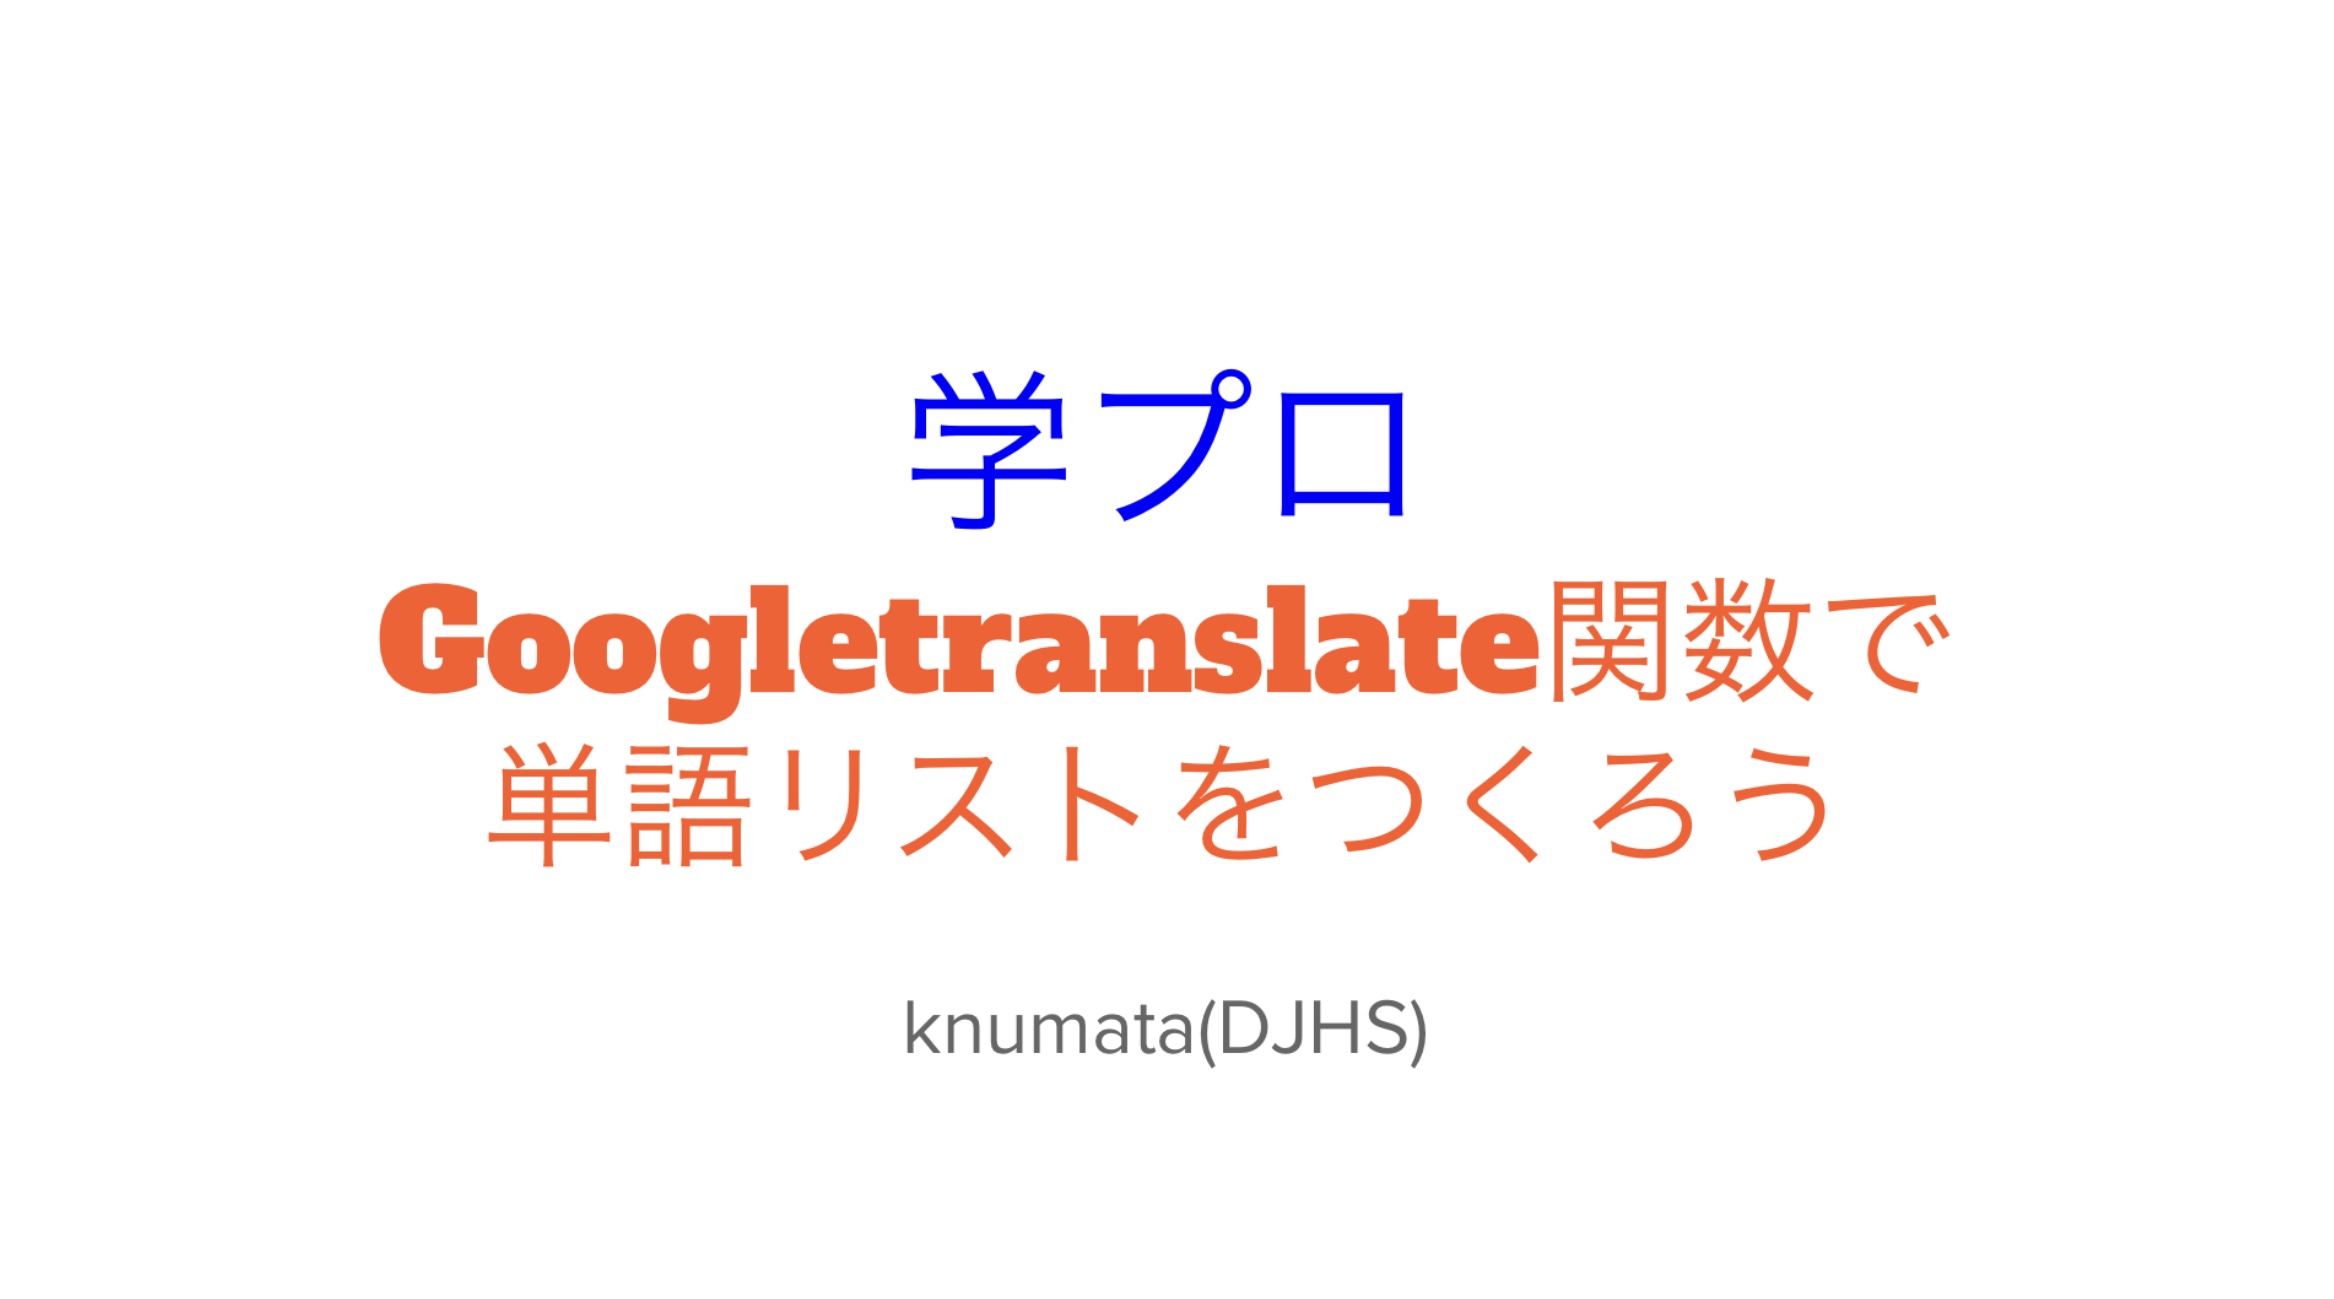 Googletranslate関数で単語帳を作ろう 同志社中学校